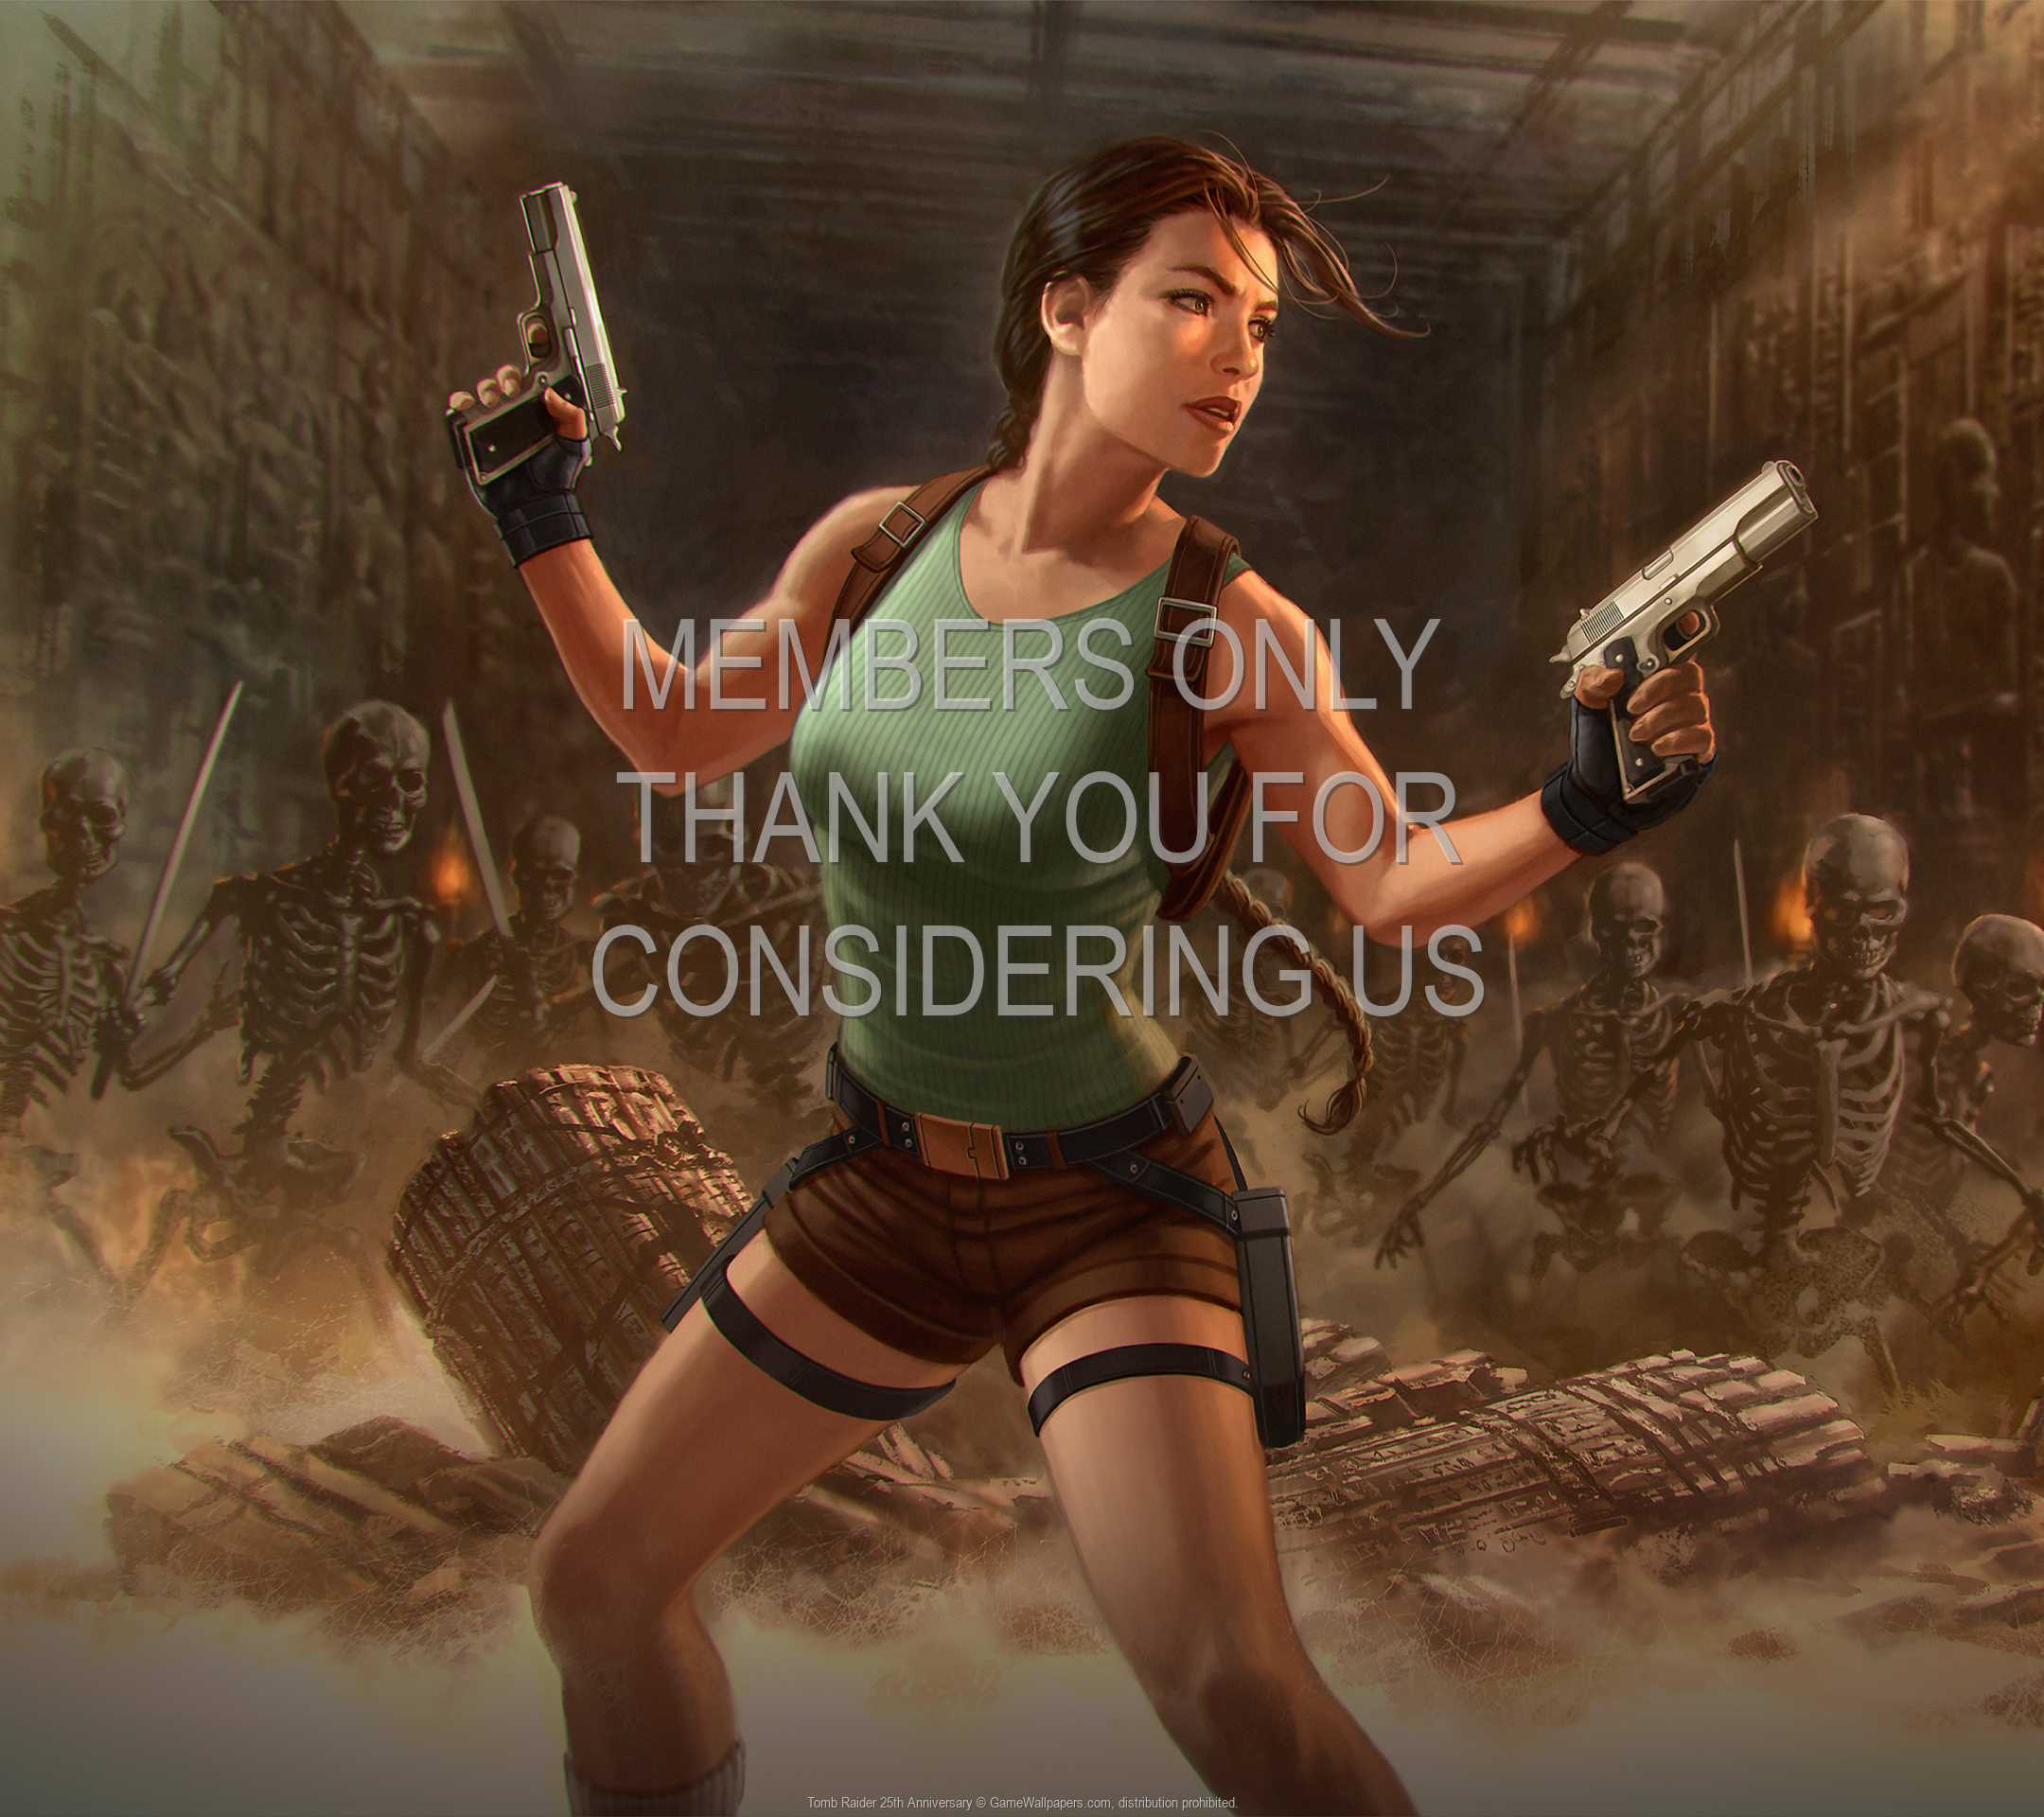 Tomb Raider 25th Anniversary 1080p%20Horizontal Mobile wallpaper or background 02